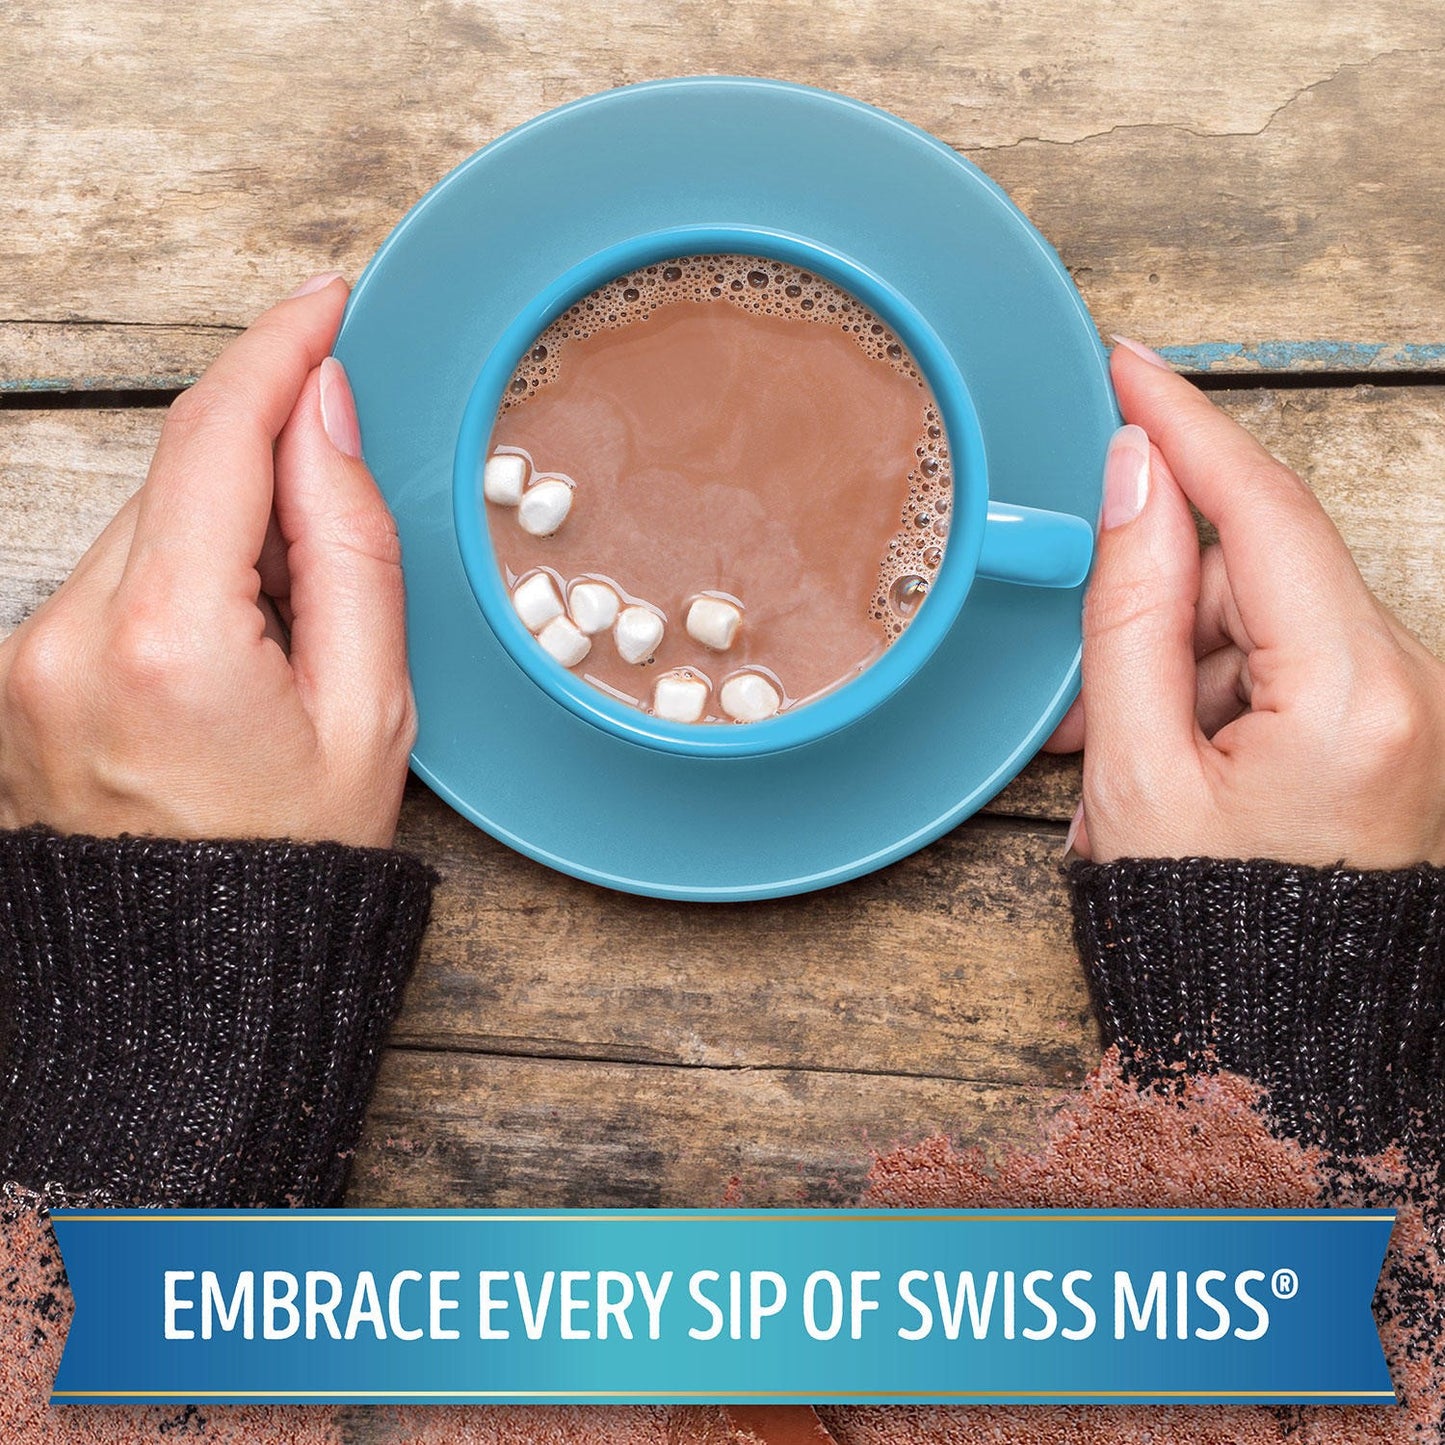 Swiss Miss Hot Cocoa Powder Milk Chocolate Mix Envelopes 1.38 oz - 50 count